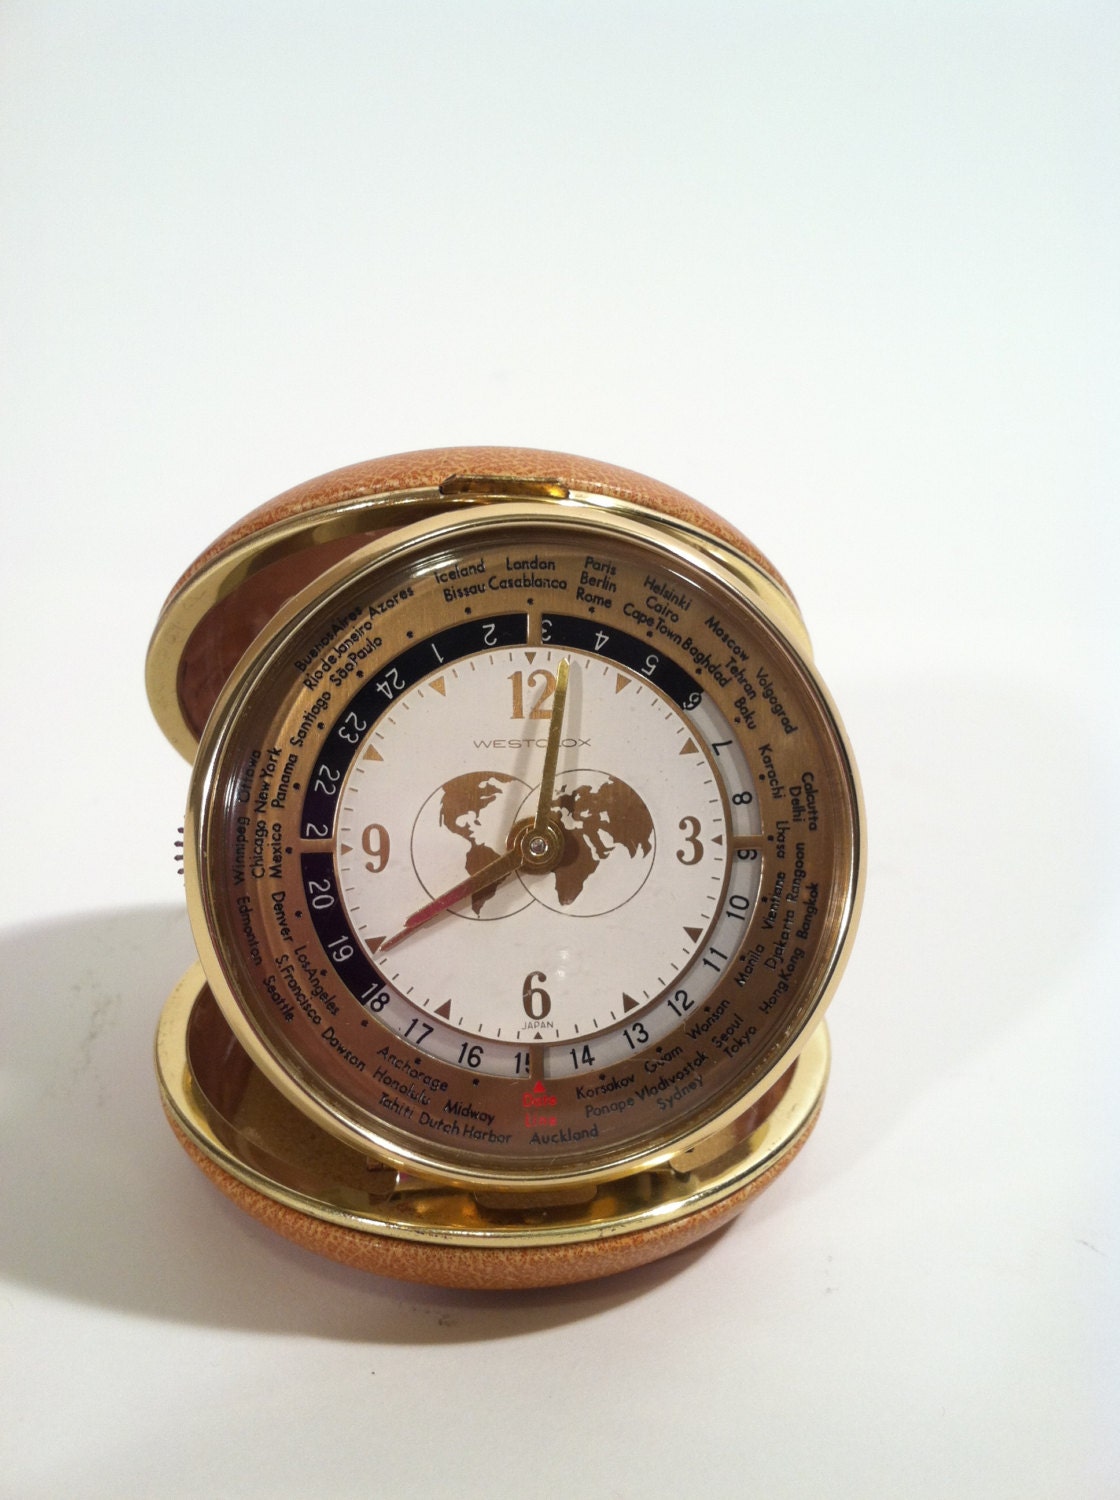 Vintage Westclox Travel Alarm Clock with International Time